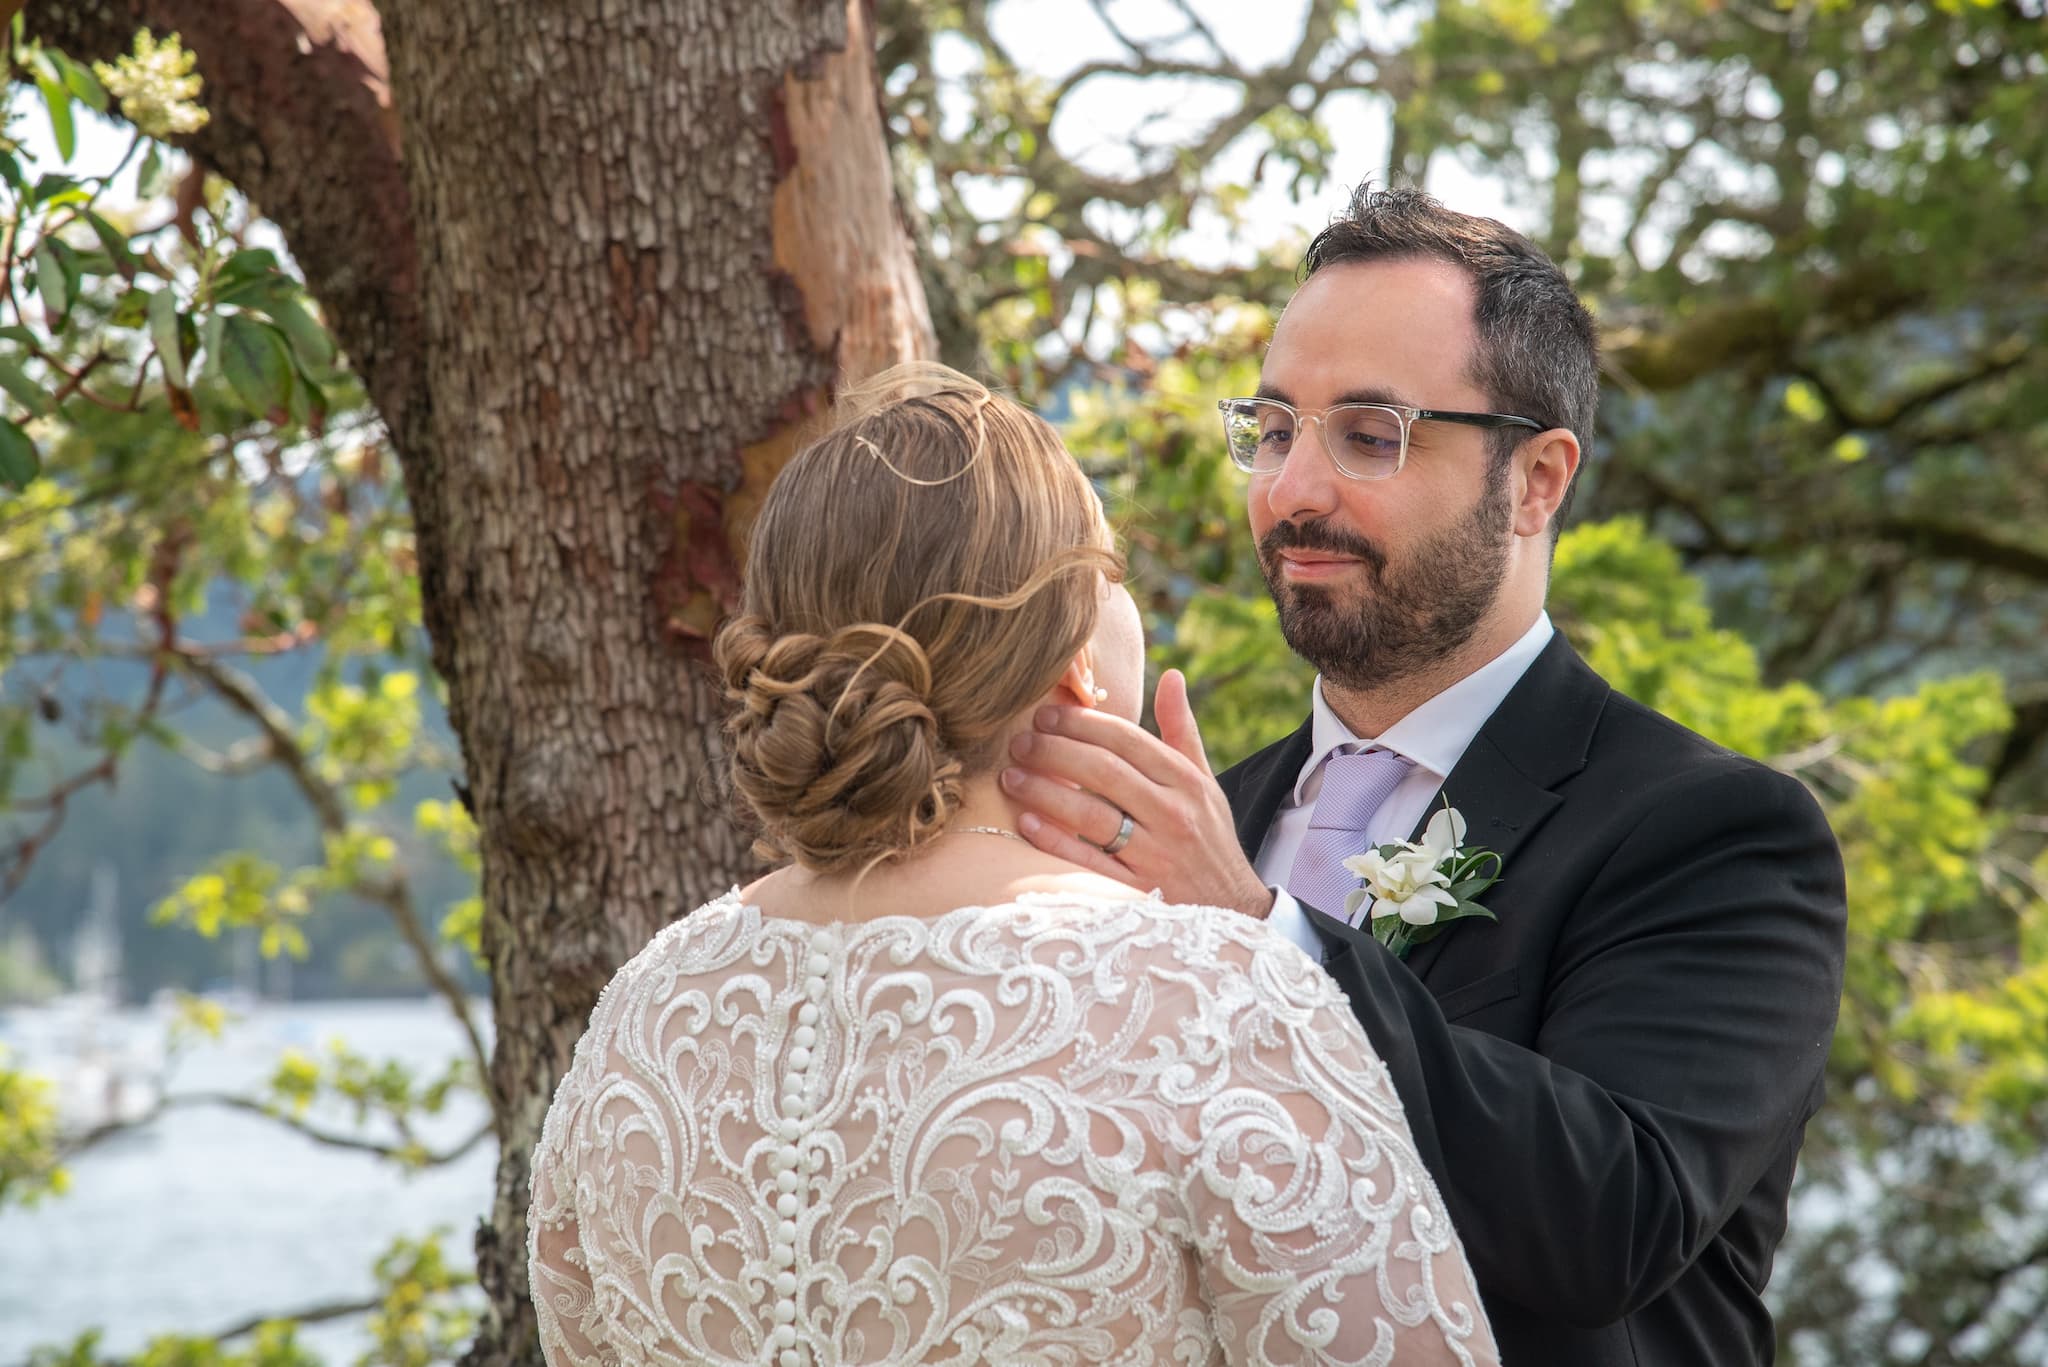 JOHANNA & GIUSEPPE'S WEDDING | BRENTWOOD BAY RESORT, BC